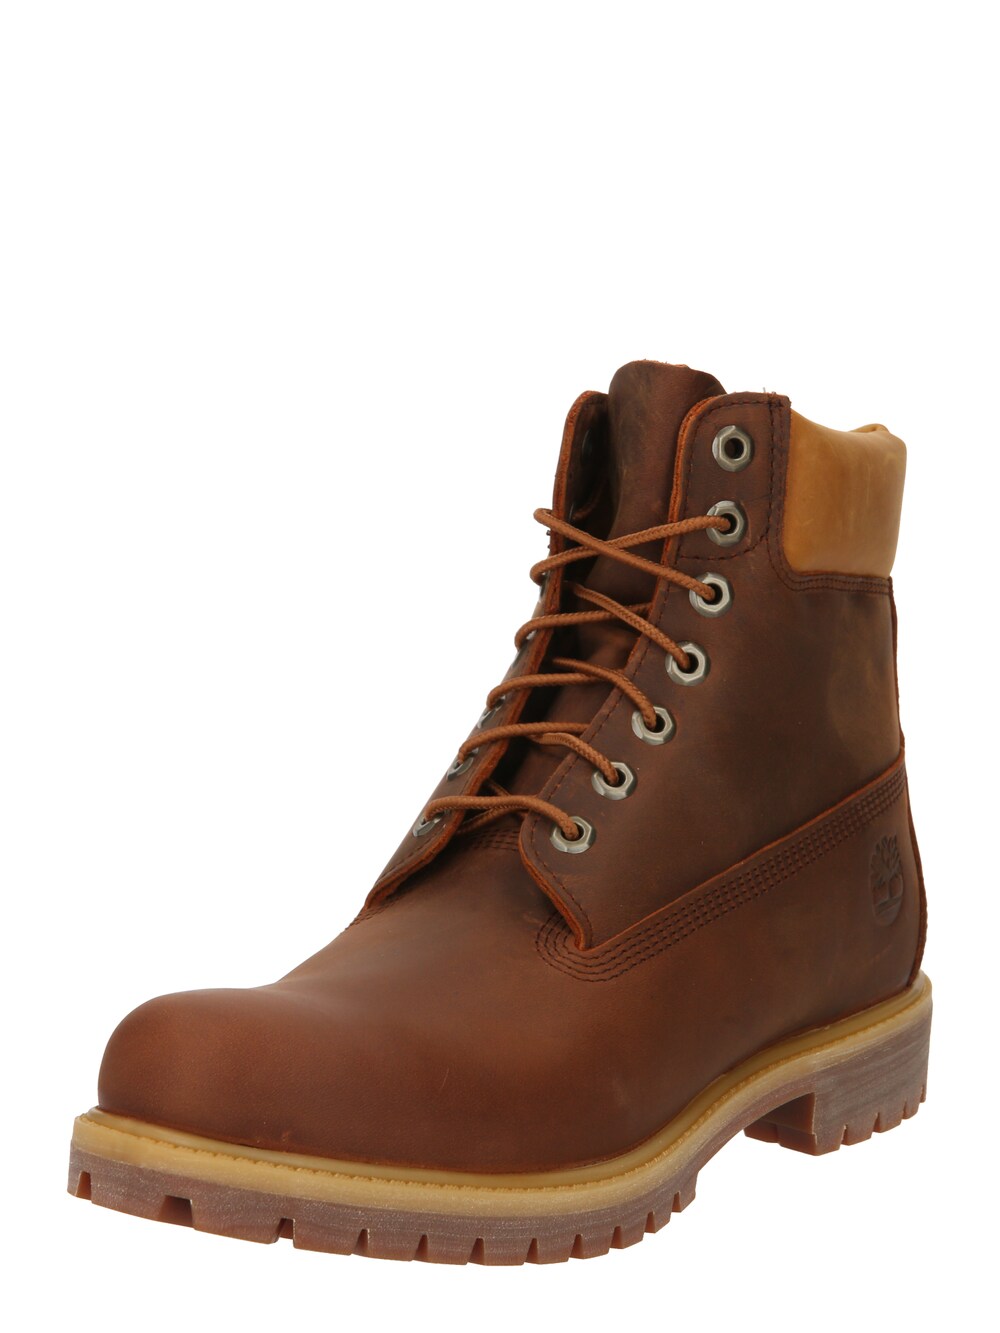 Ботинки на шнуровке Timberland 6in Premium, коричневый/коньяк